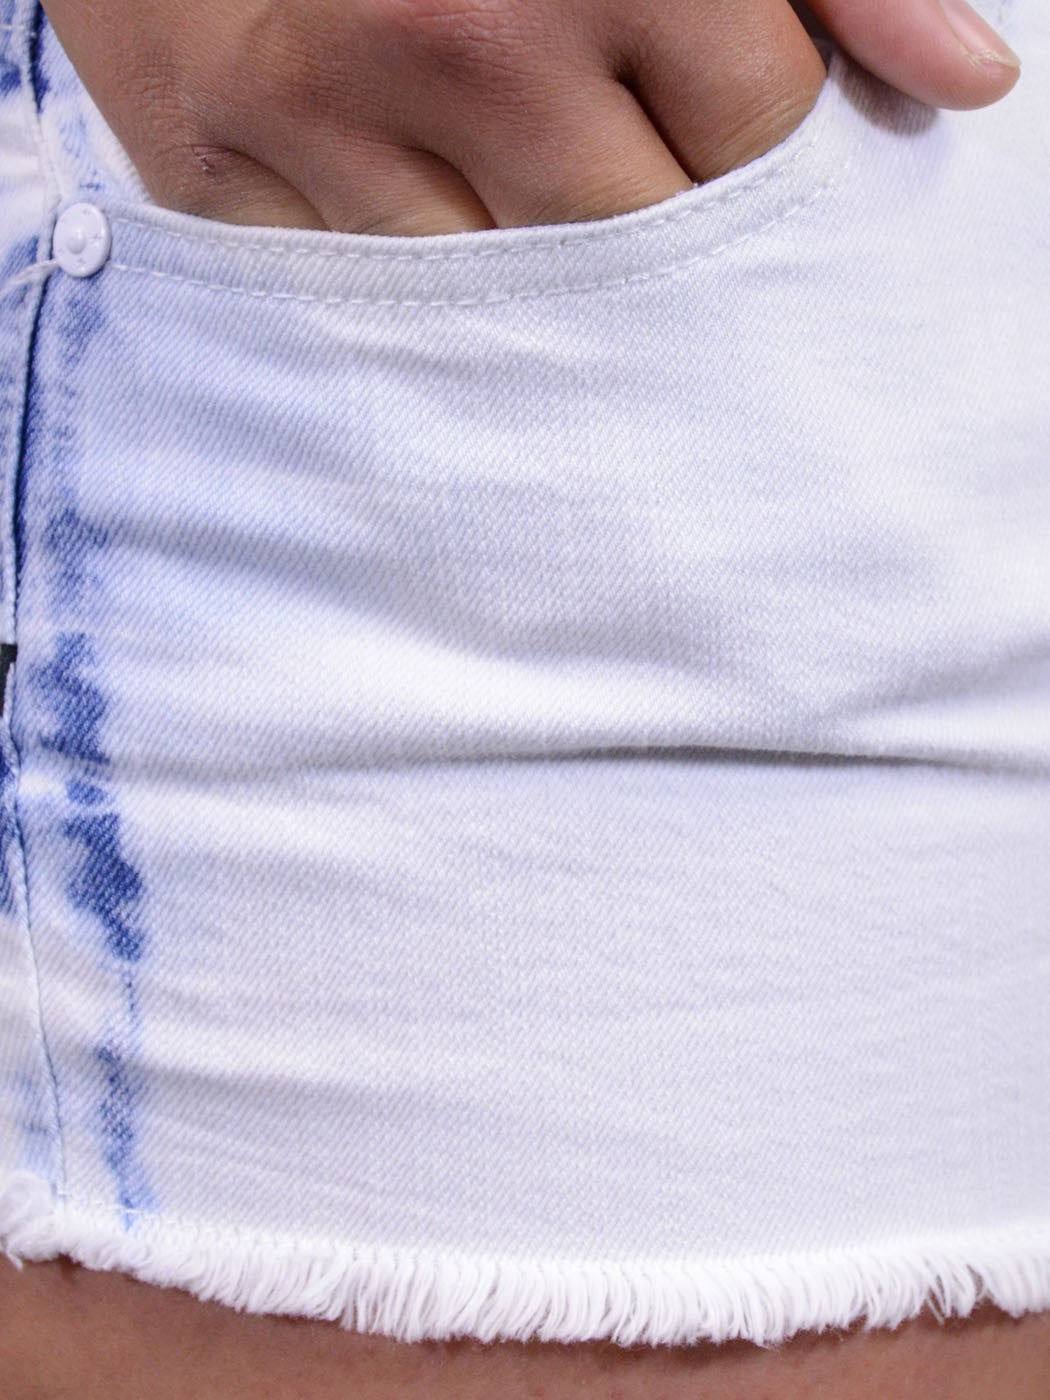 YMI Jeans White Denim Distressed Cutoff Summer Shorts With Frayed Hem